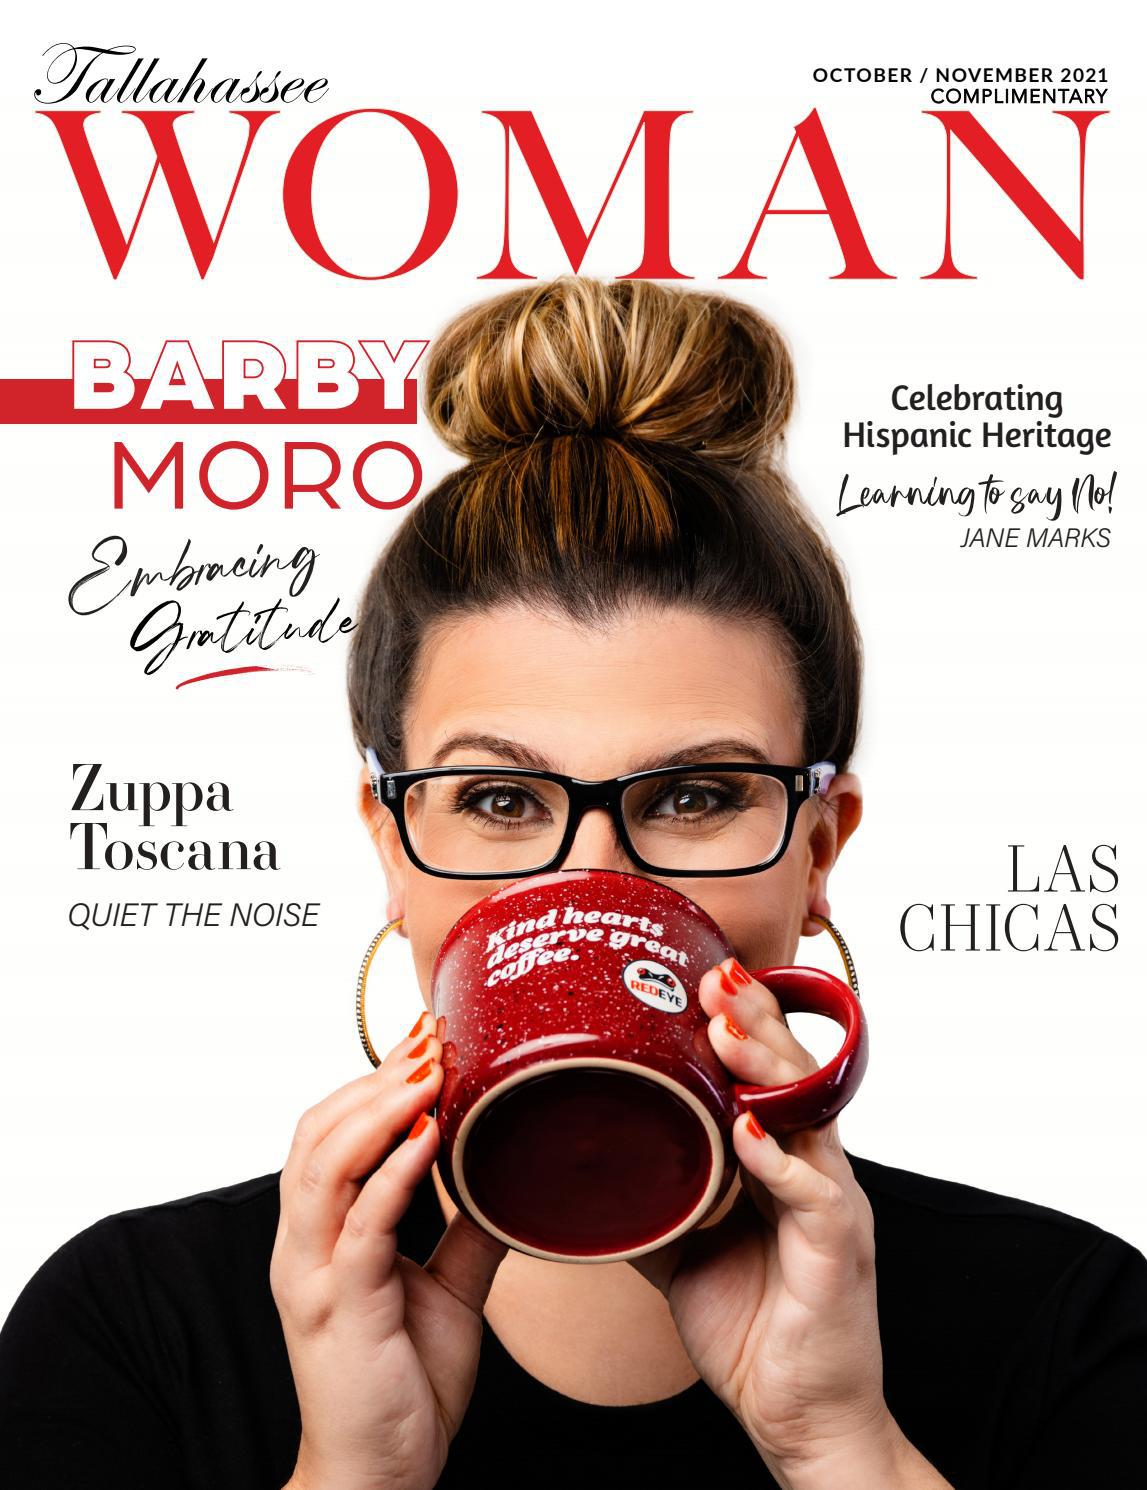 Tallahassee Woman Magazine October/November 2021